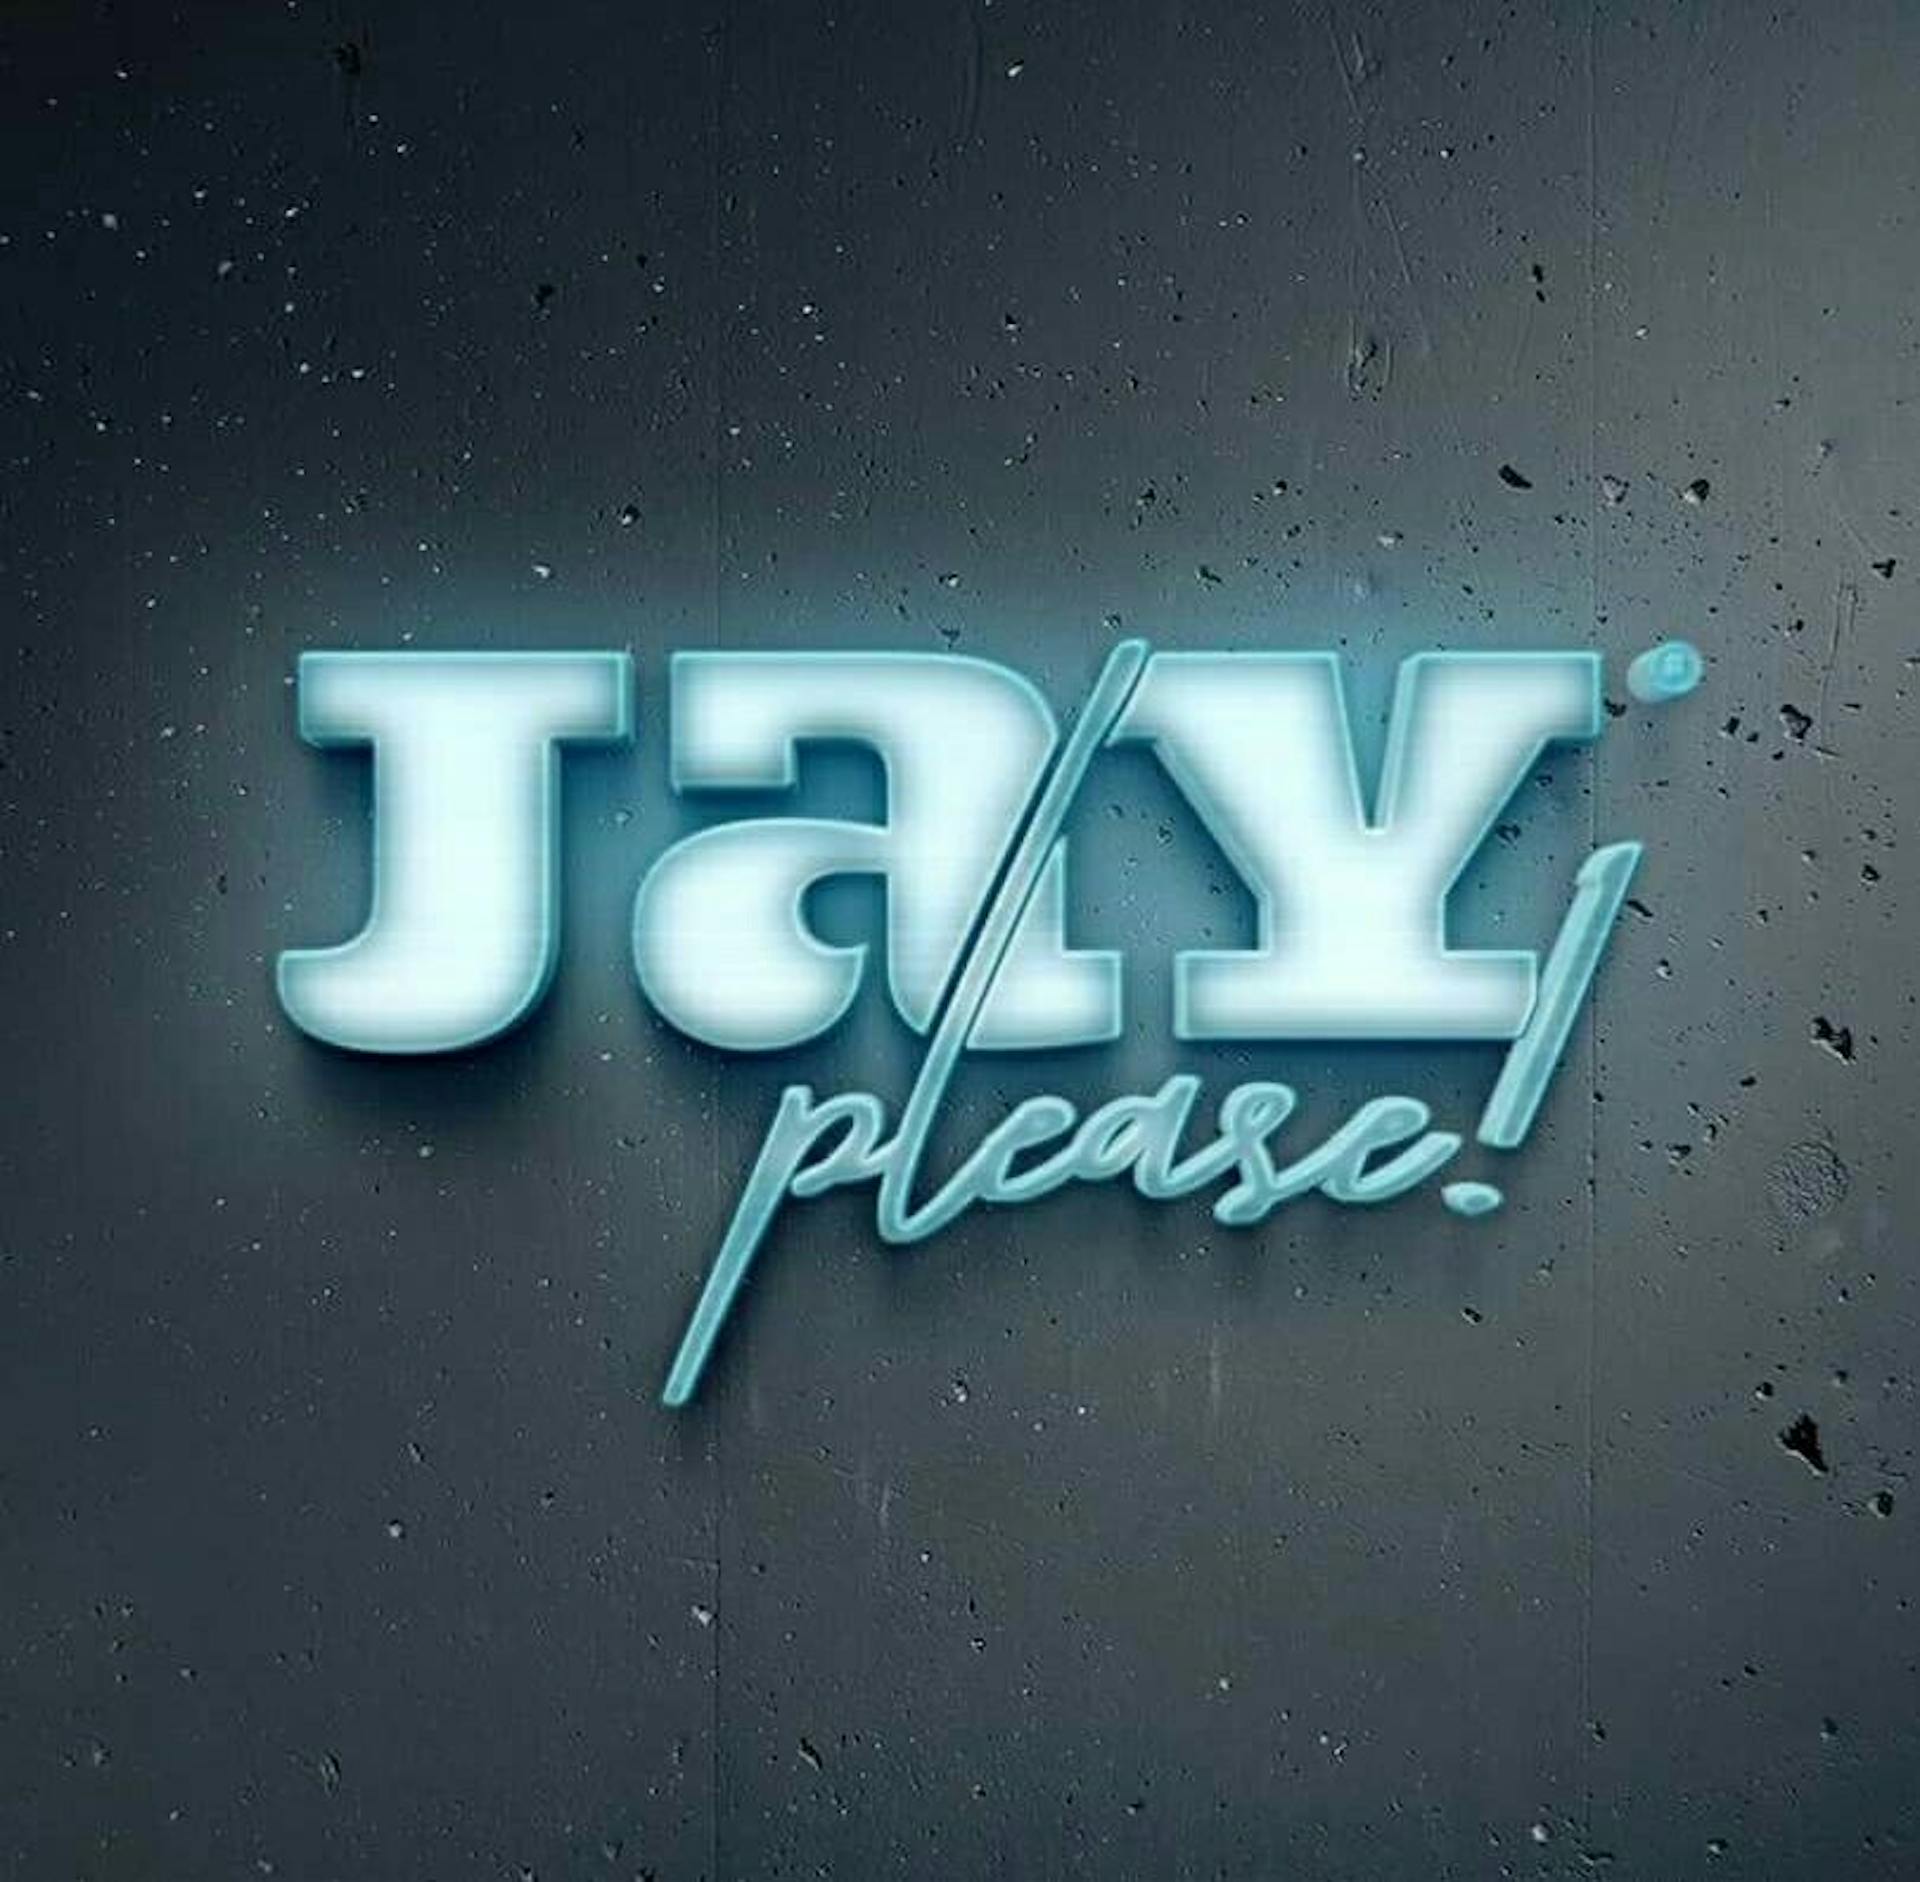 Jay Please!